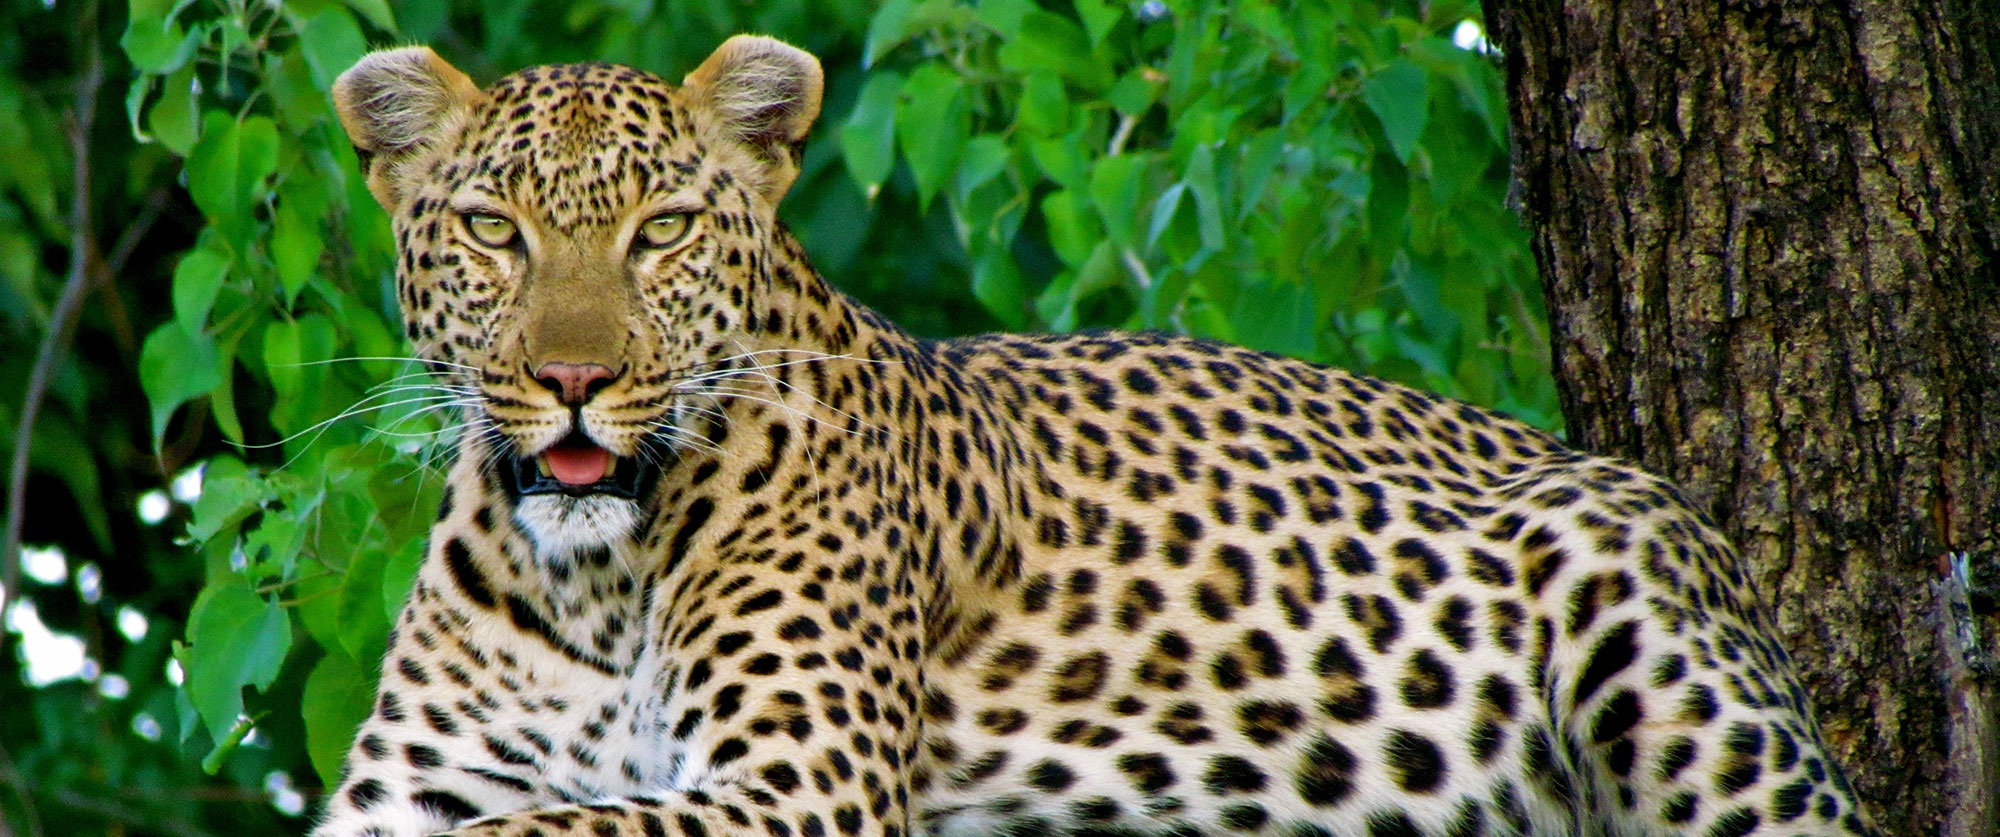 South Africa Vacation - African Wildlife Safari